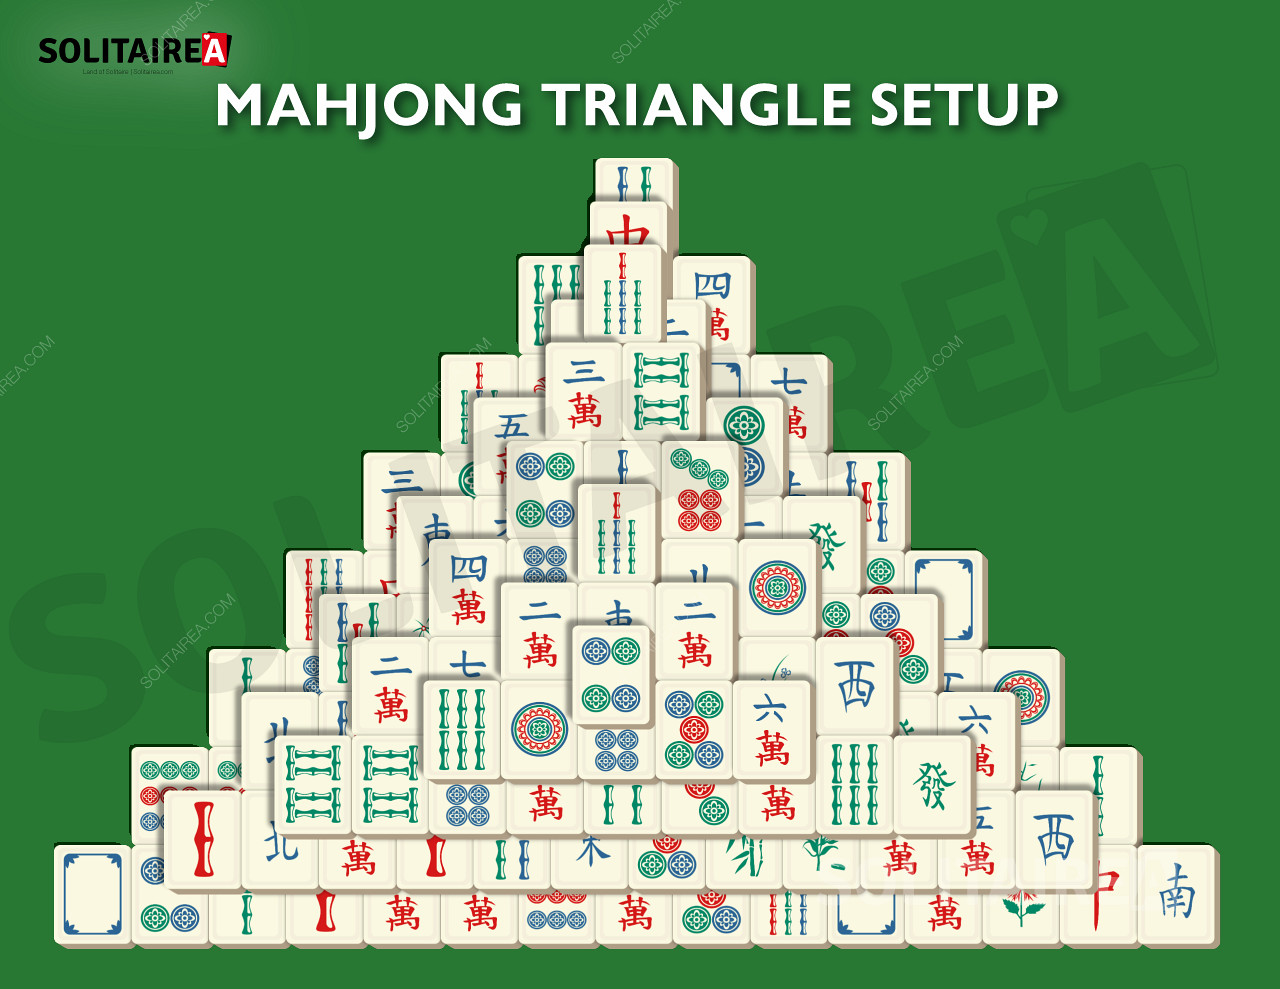 Mahjong Triangle - The Triangular Layout